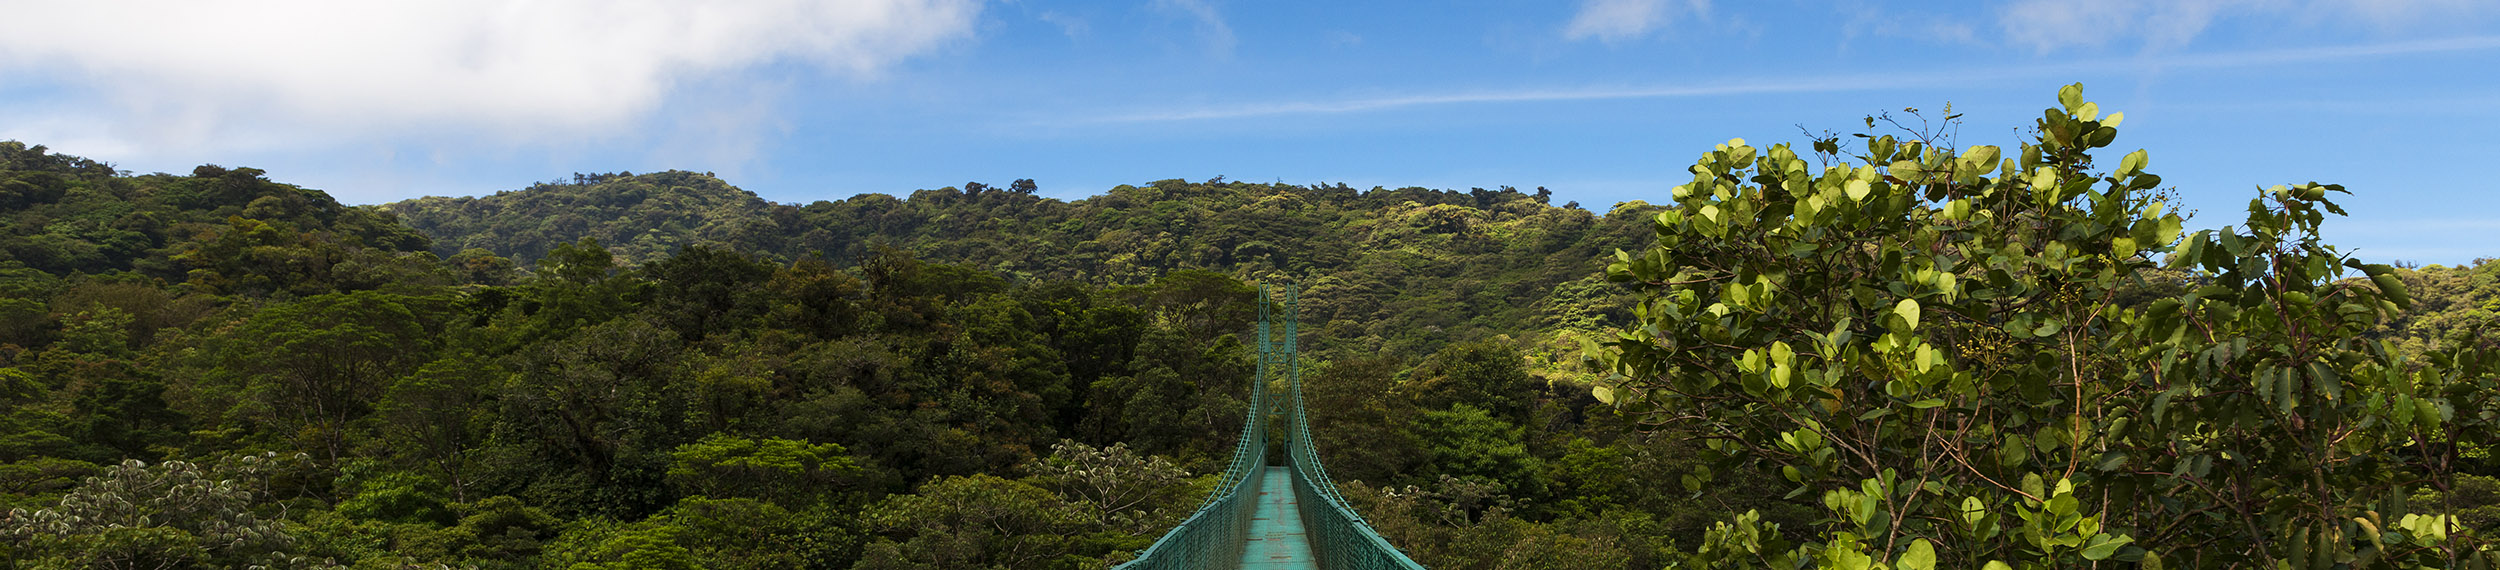 Bridge over the canopy of trees in Monteverde, Costa Rica